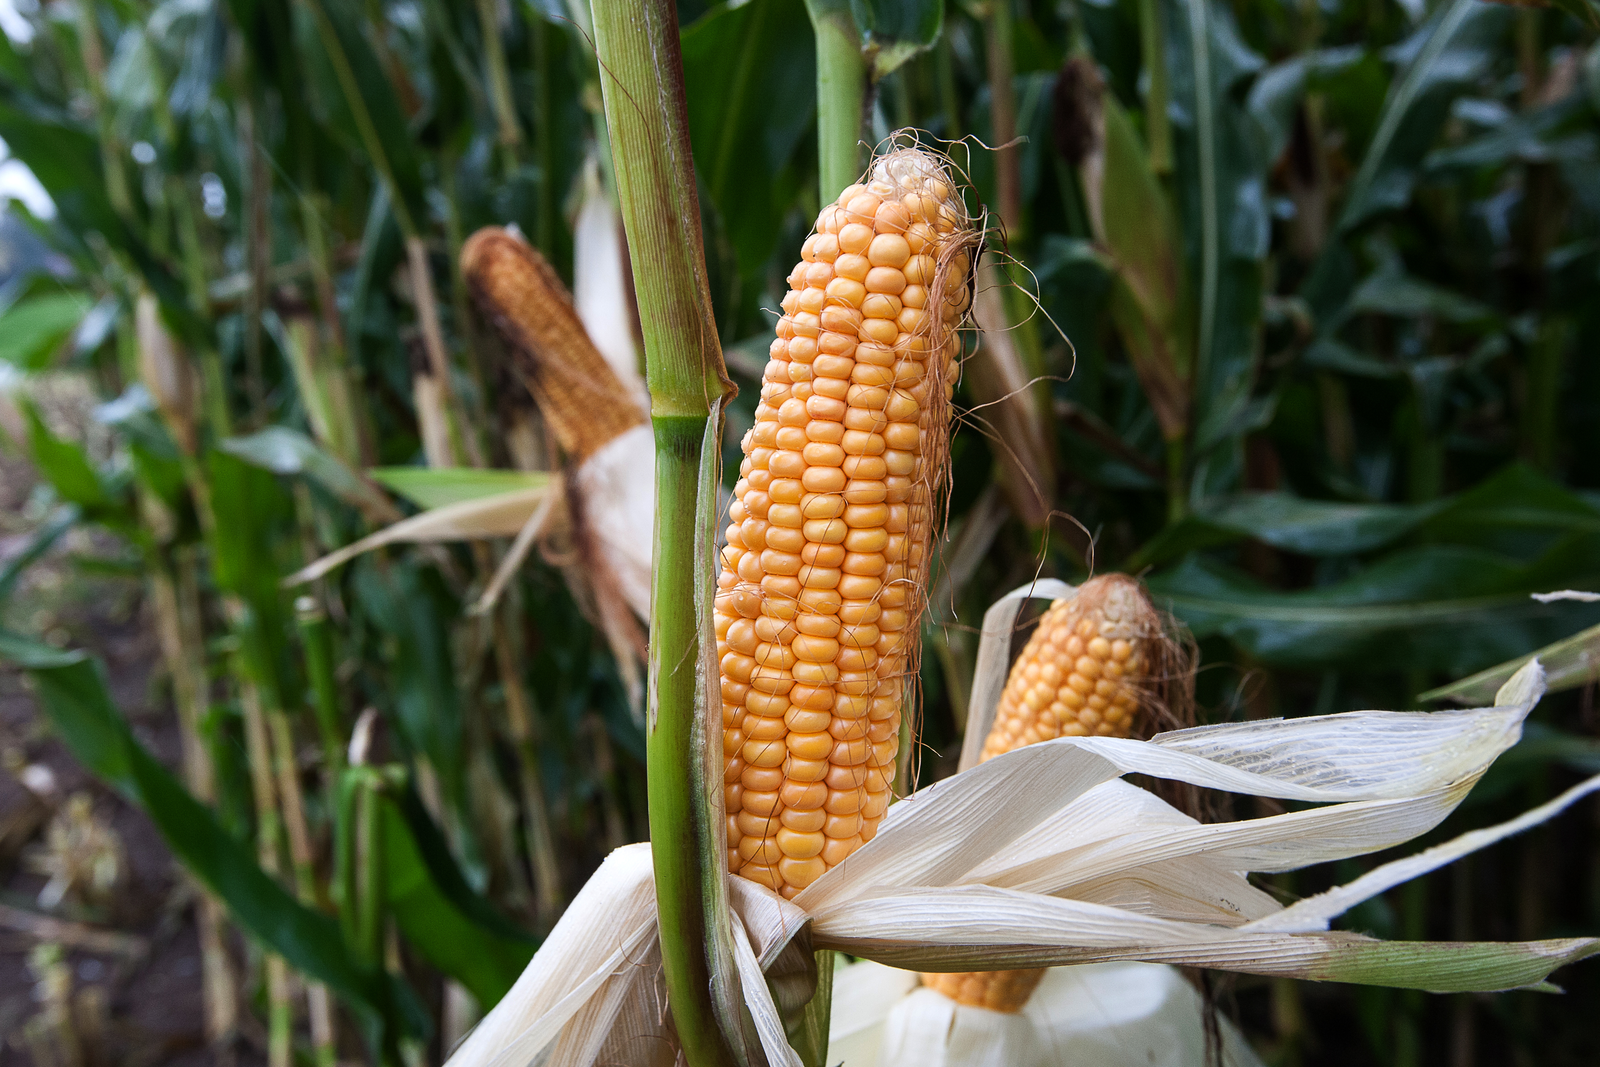 Polish maize tested for mycotoxins